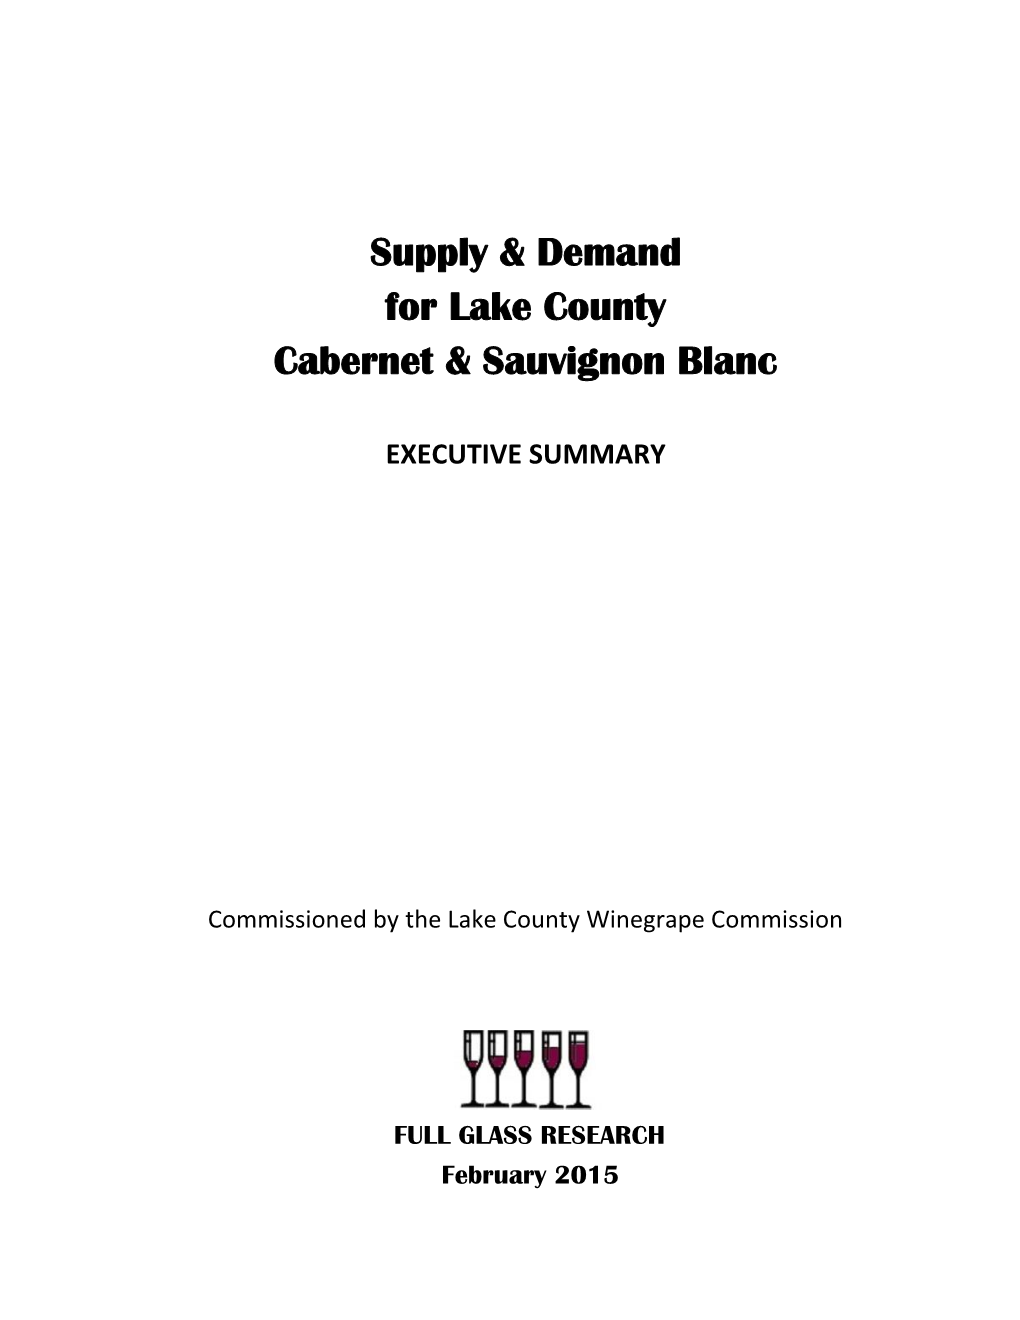 Supply & Demand for Lake County Cabernet & Sauvignon Blanc